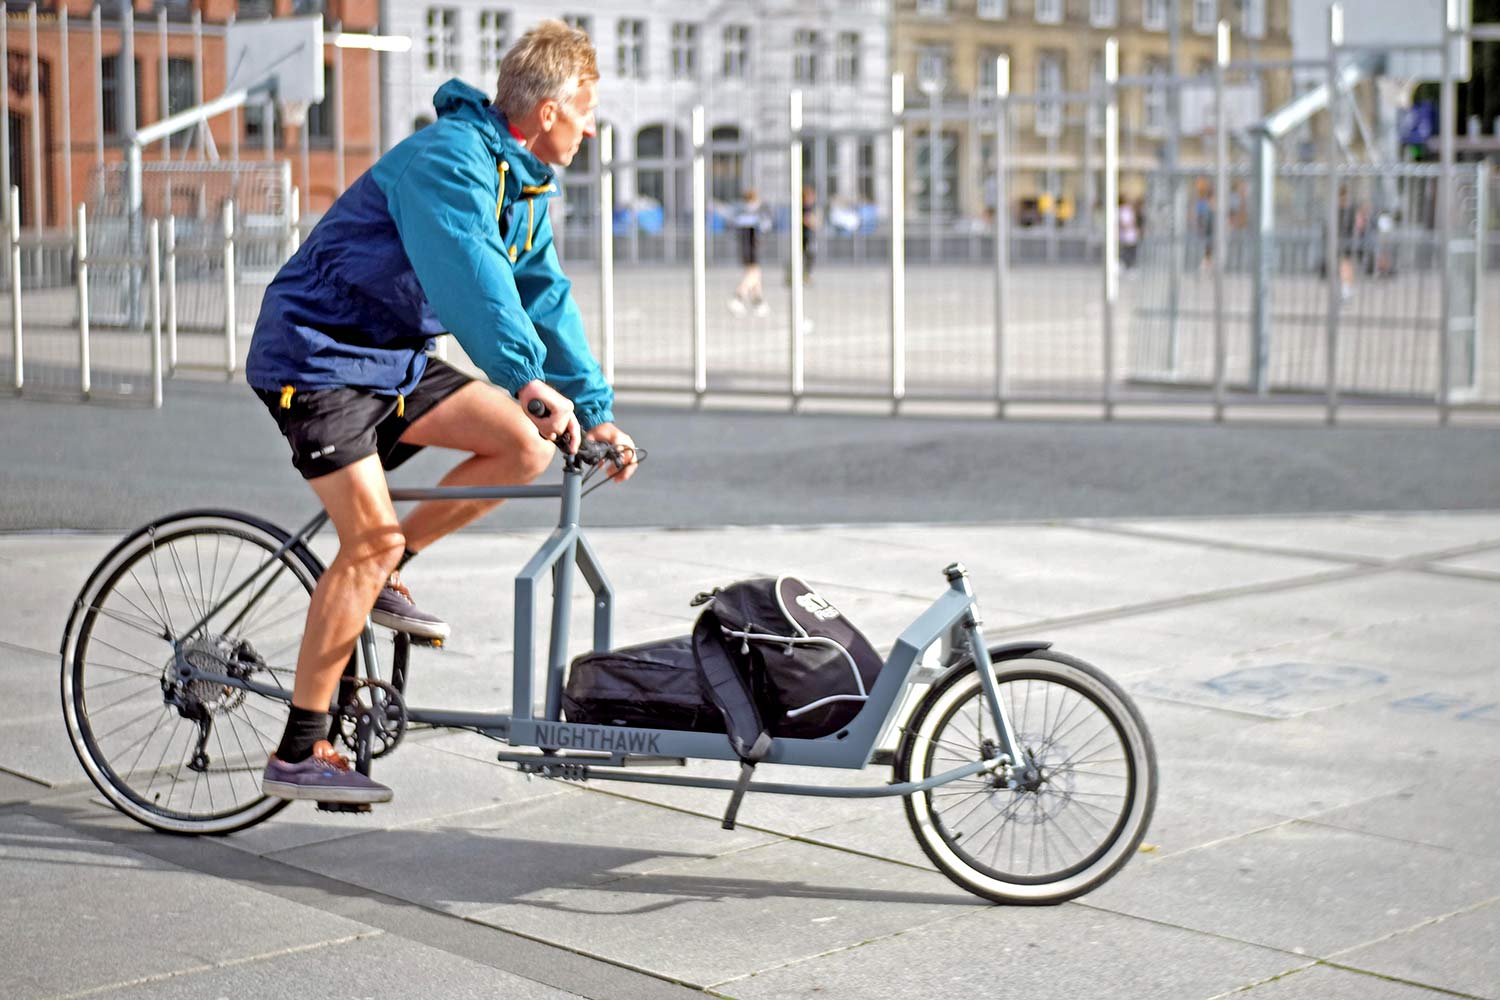 KP Cyclery Nighthawk steel cargo bike, affordable EU-made customizable long john cargo bikes, riding